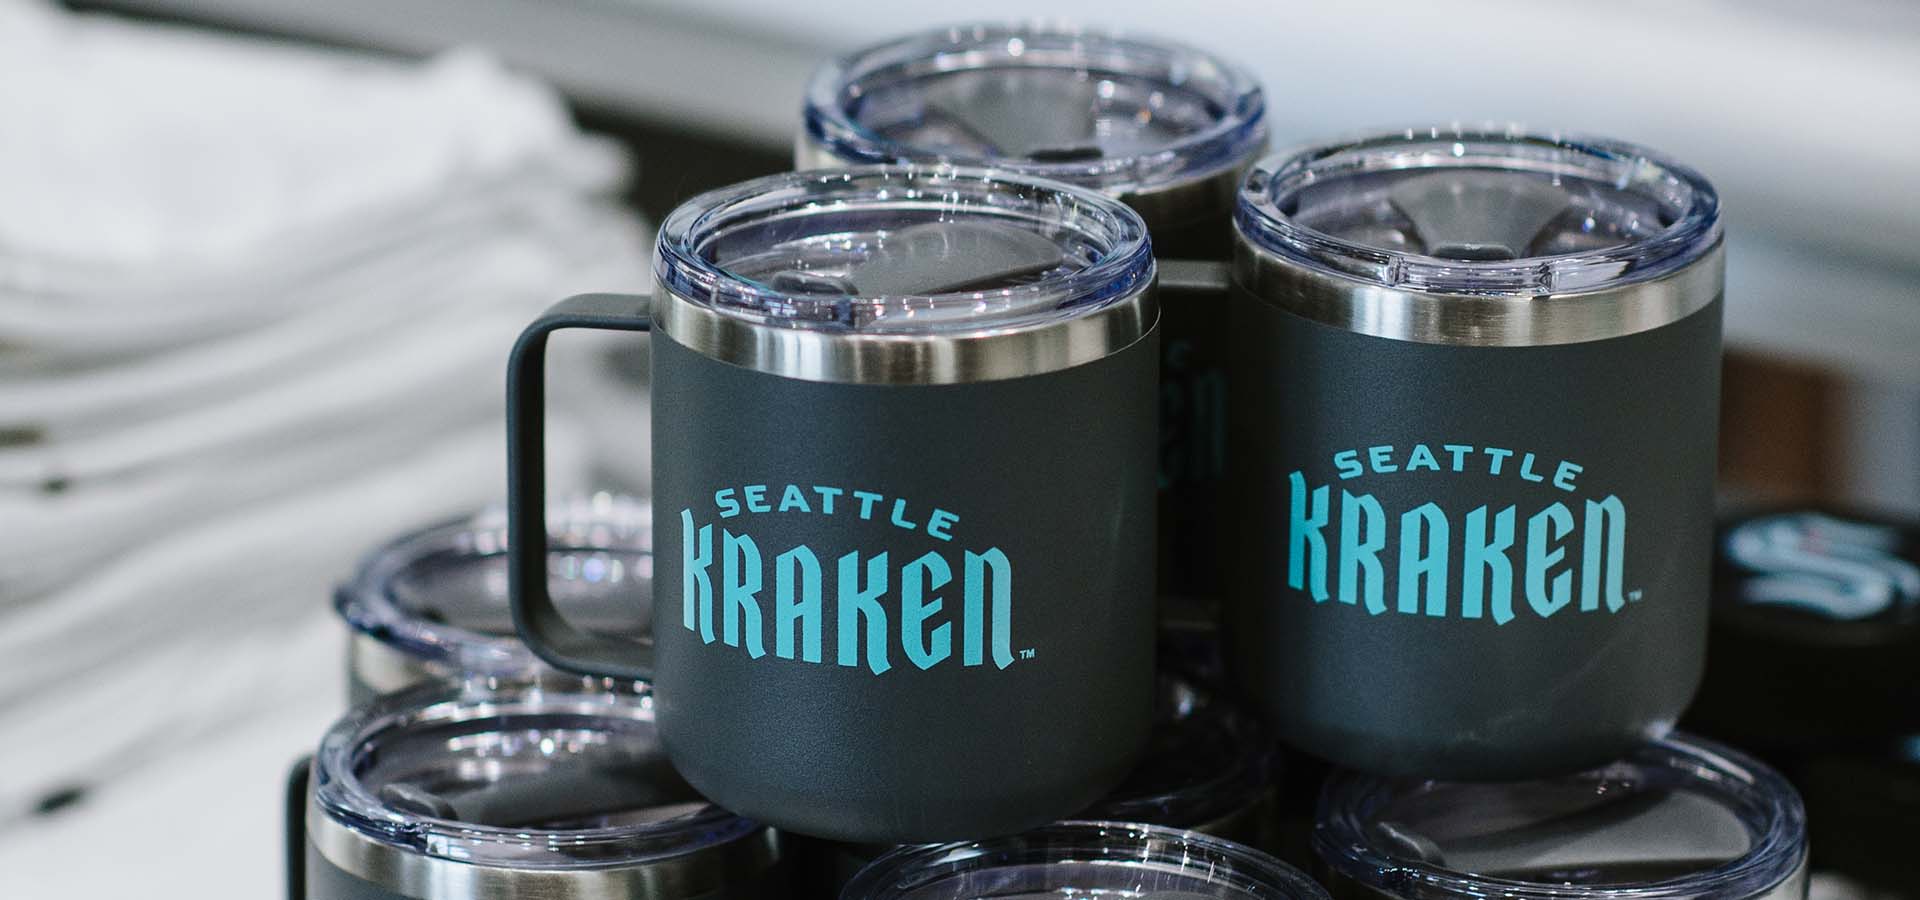 Seattle Kraken merchandise table with mugs on it